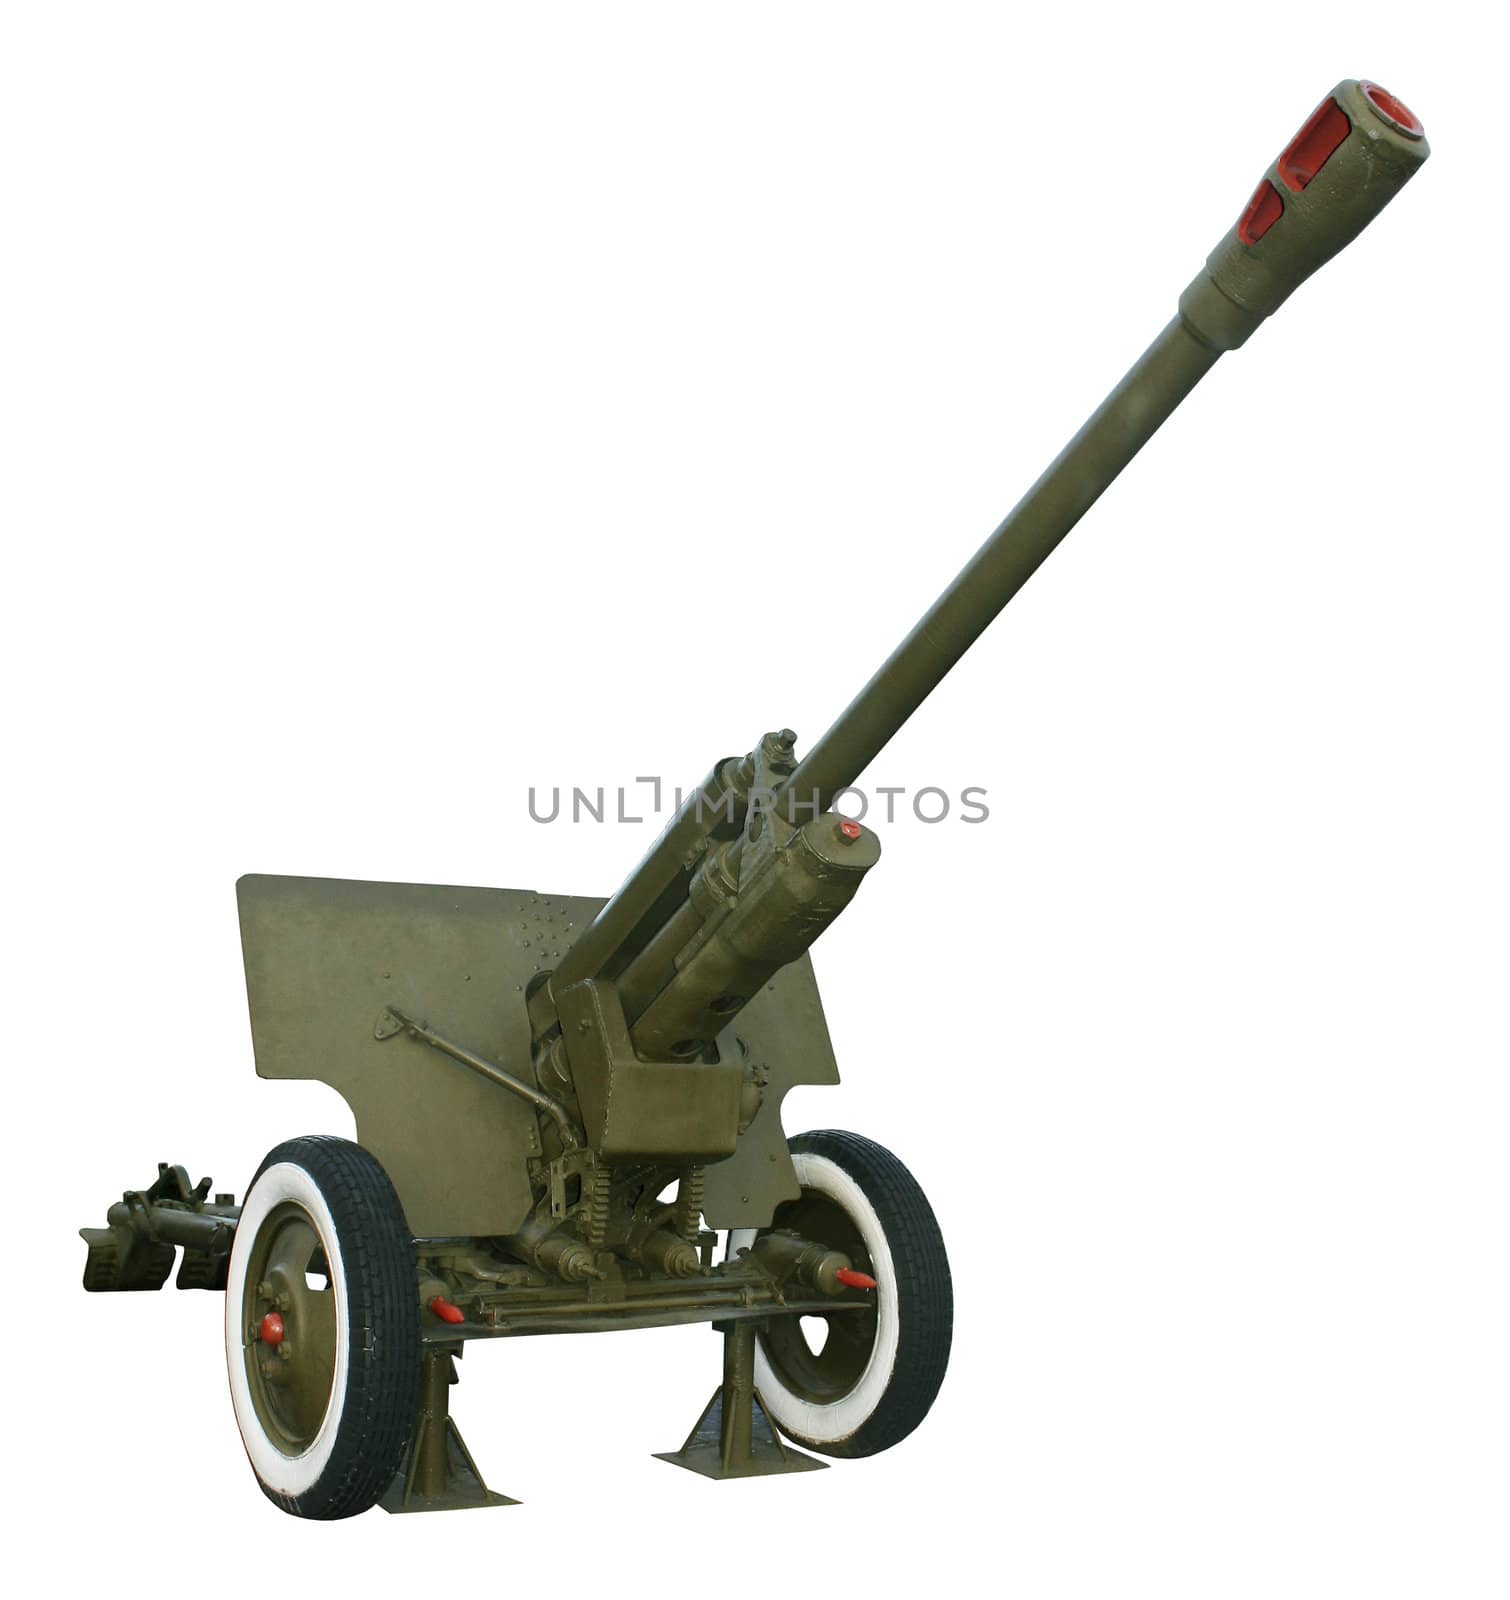 Cannon. Artillery Gun. Antitank Gun
Isolated on white background